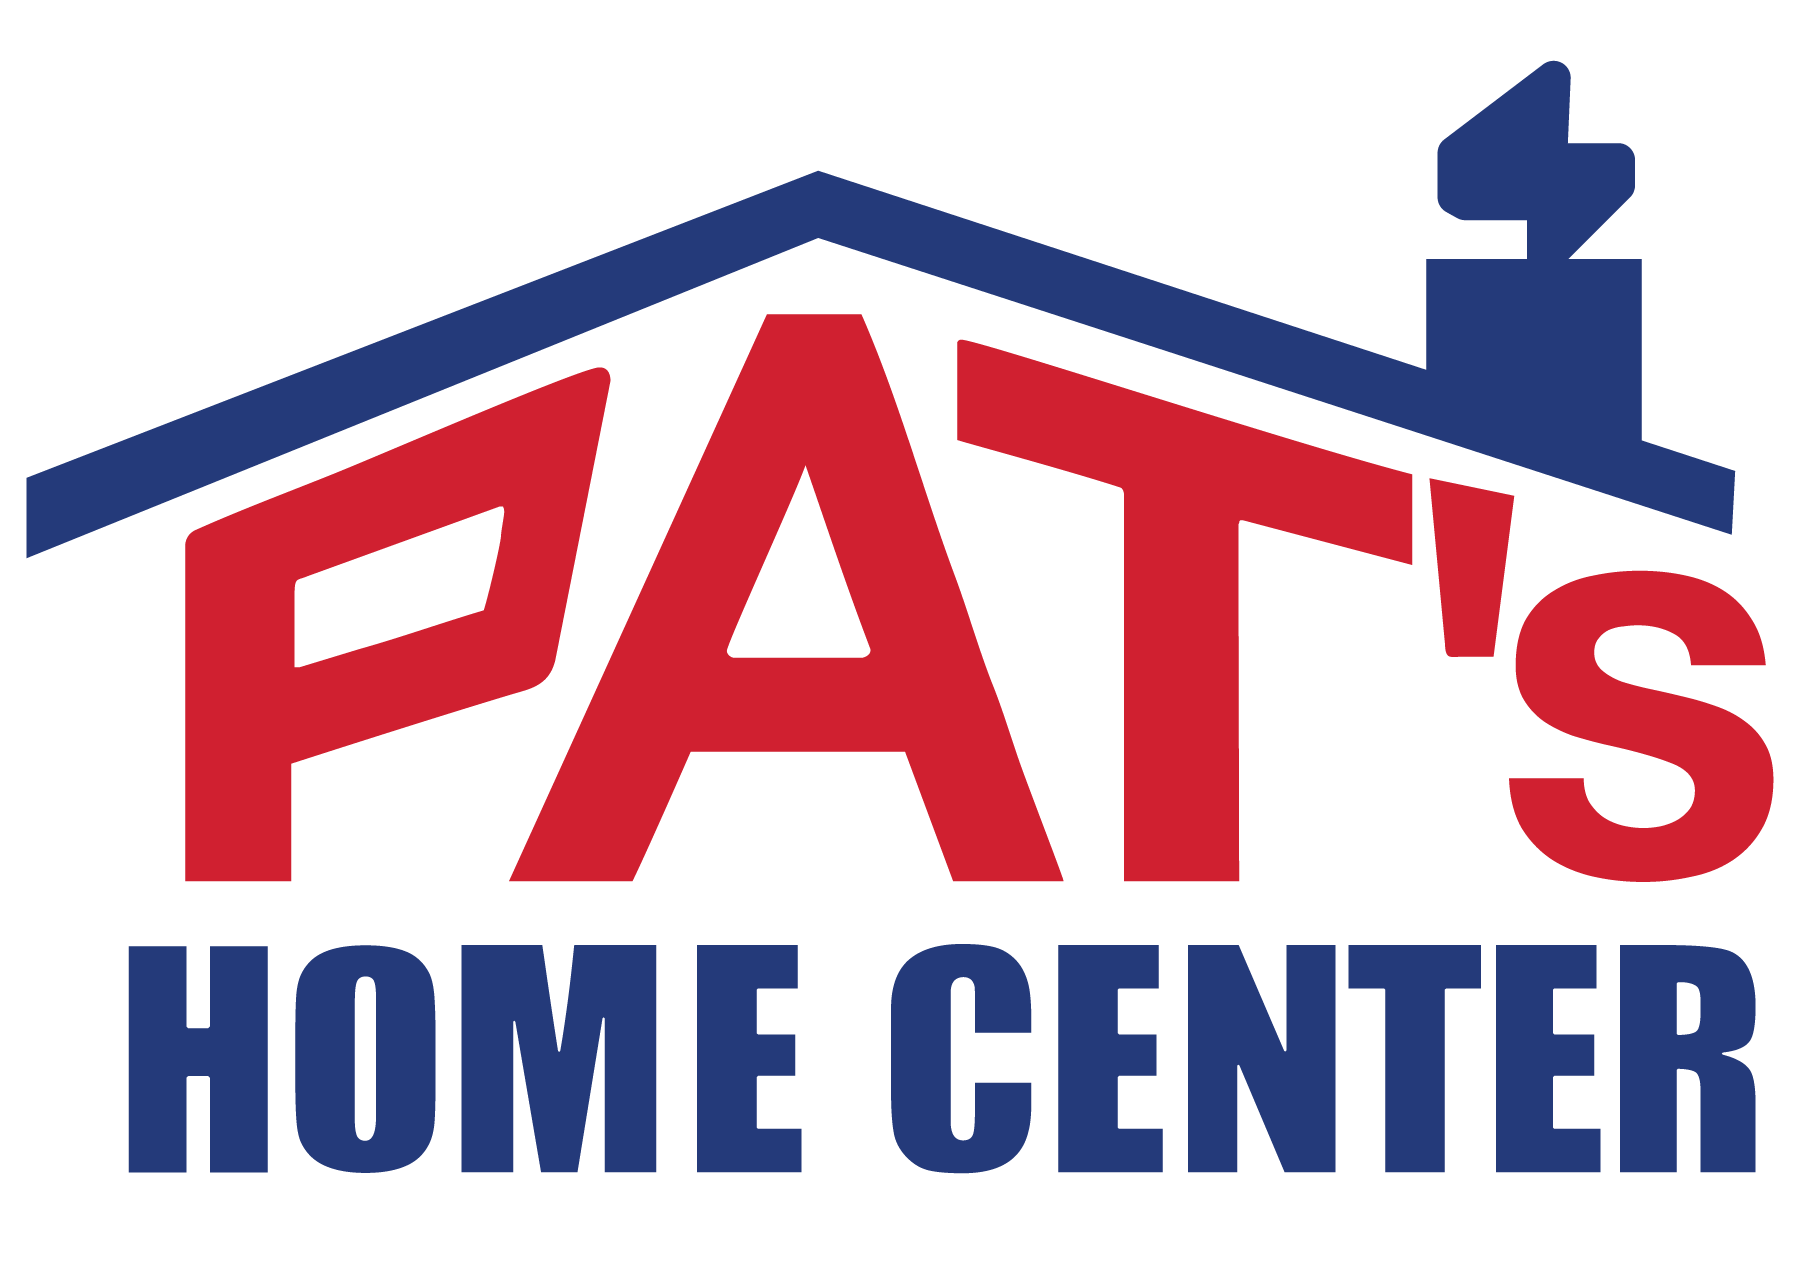 Pat's Home Center - Logo